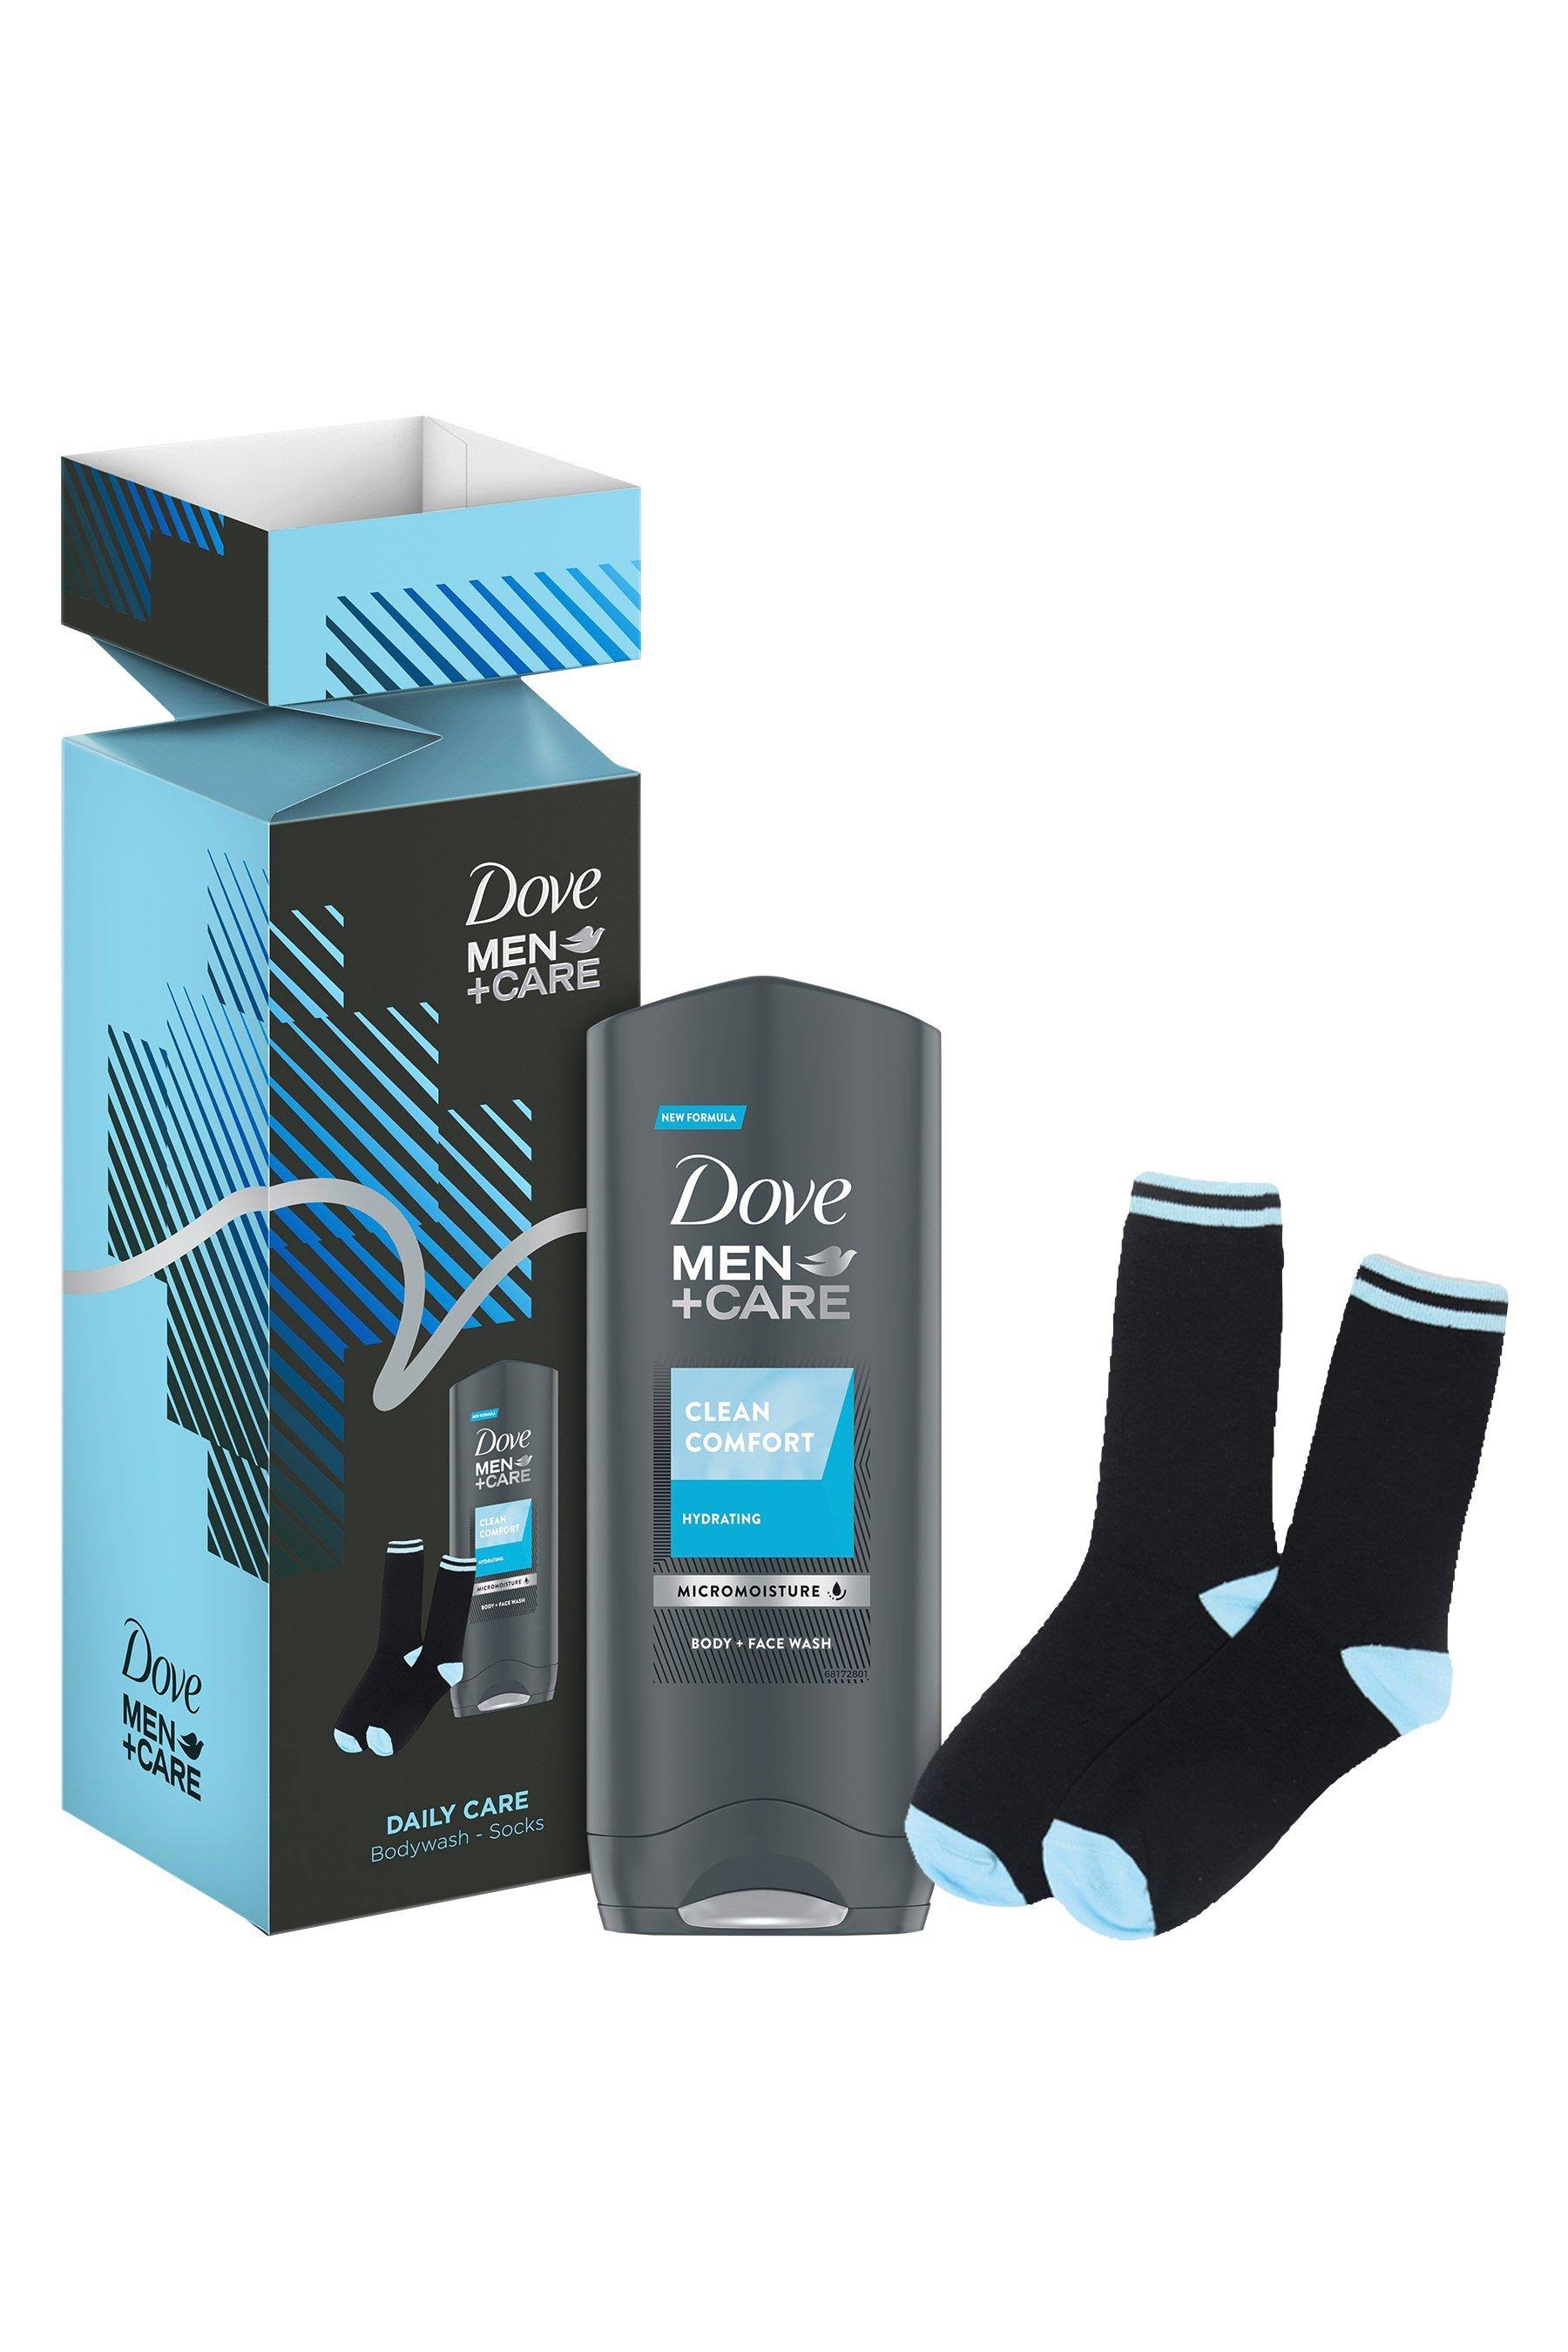 Dove Men+Care Clean Comfort Daily Care Body Wash & Socks Gift Set For Men